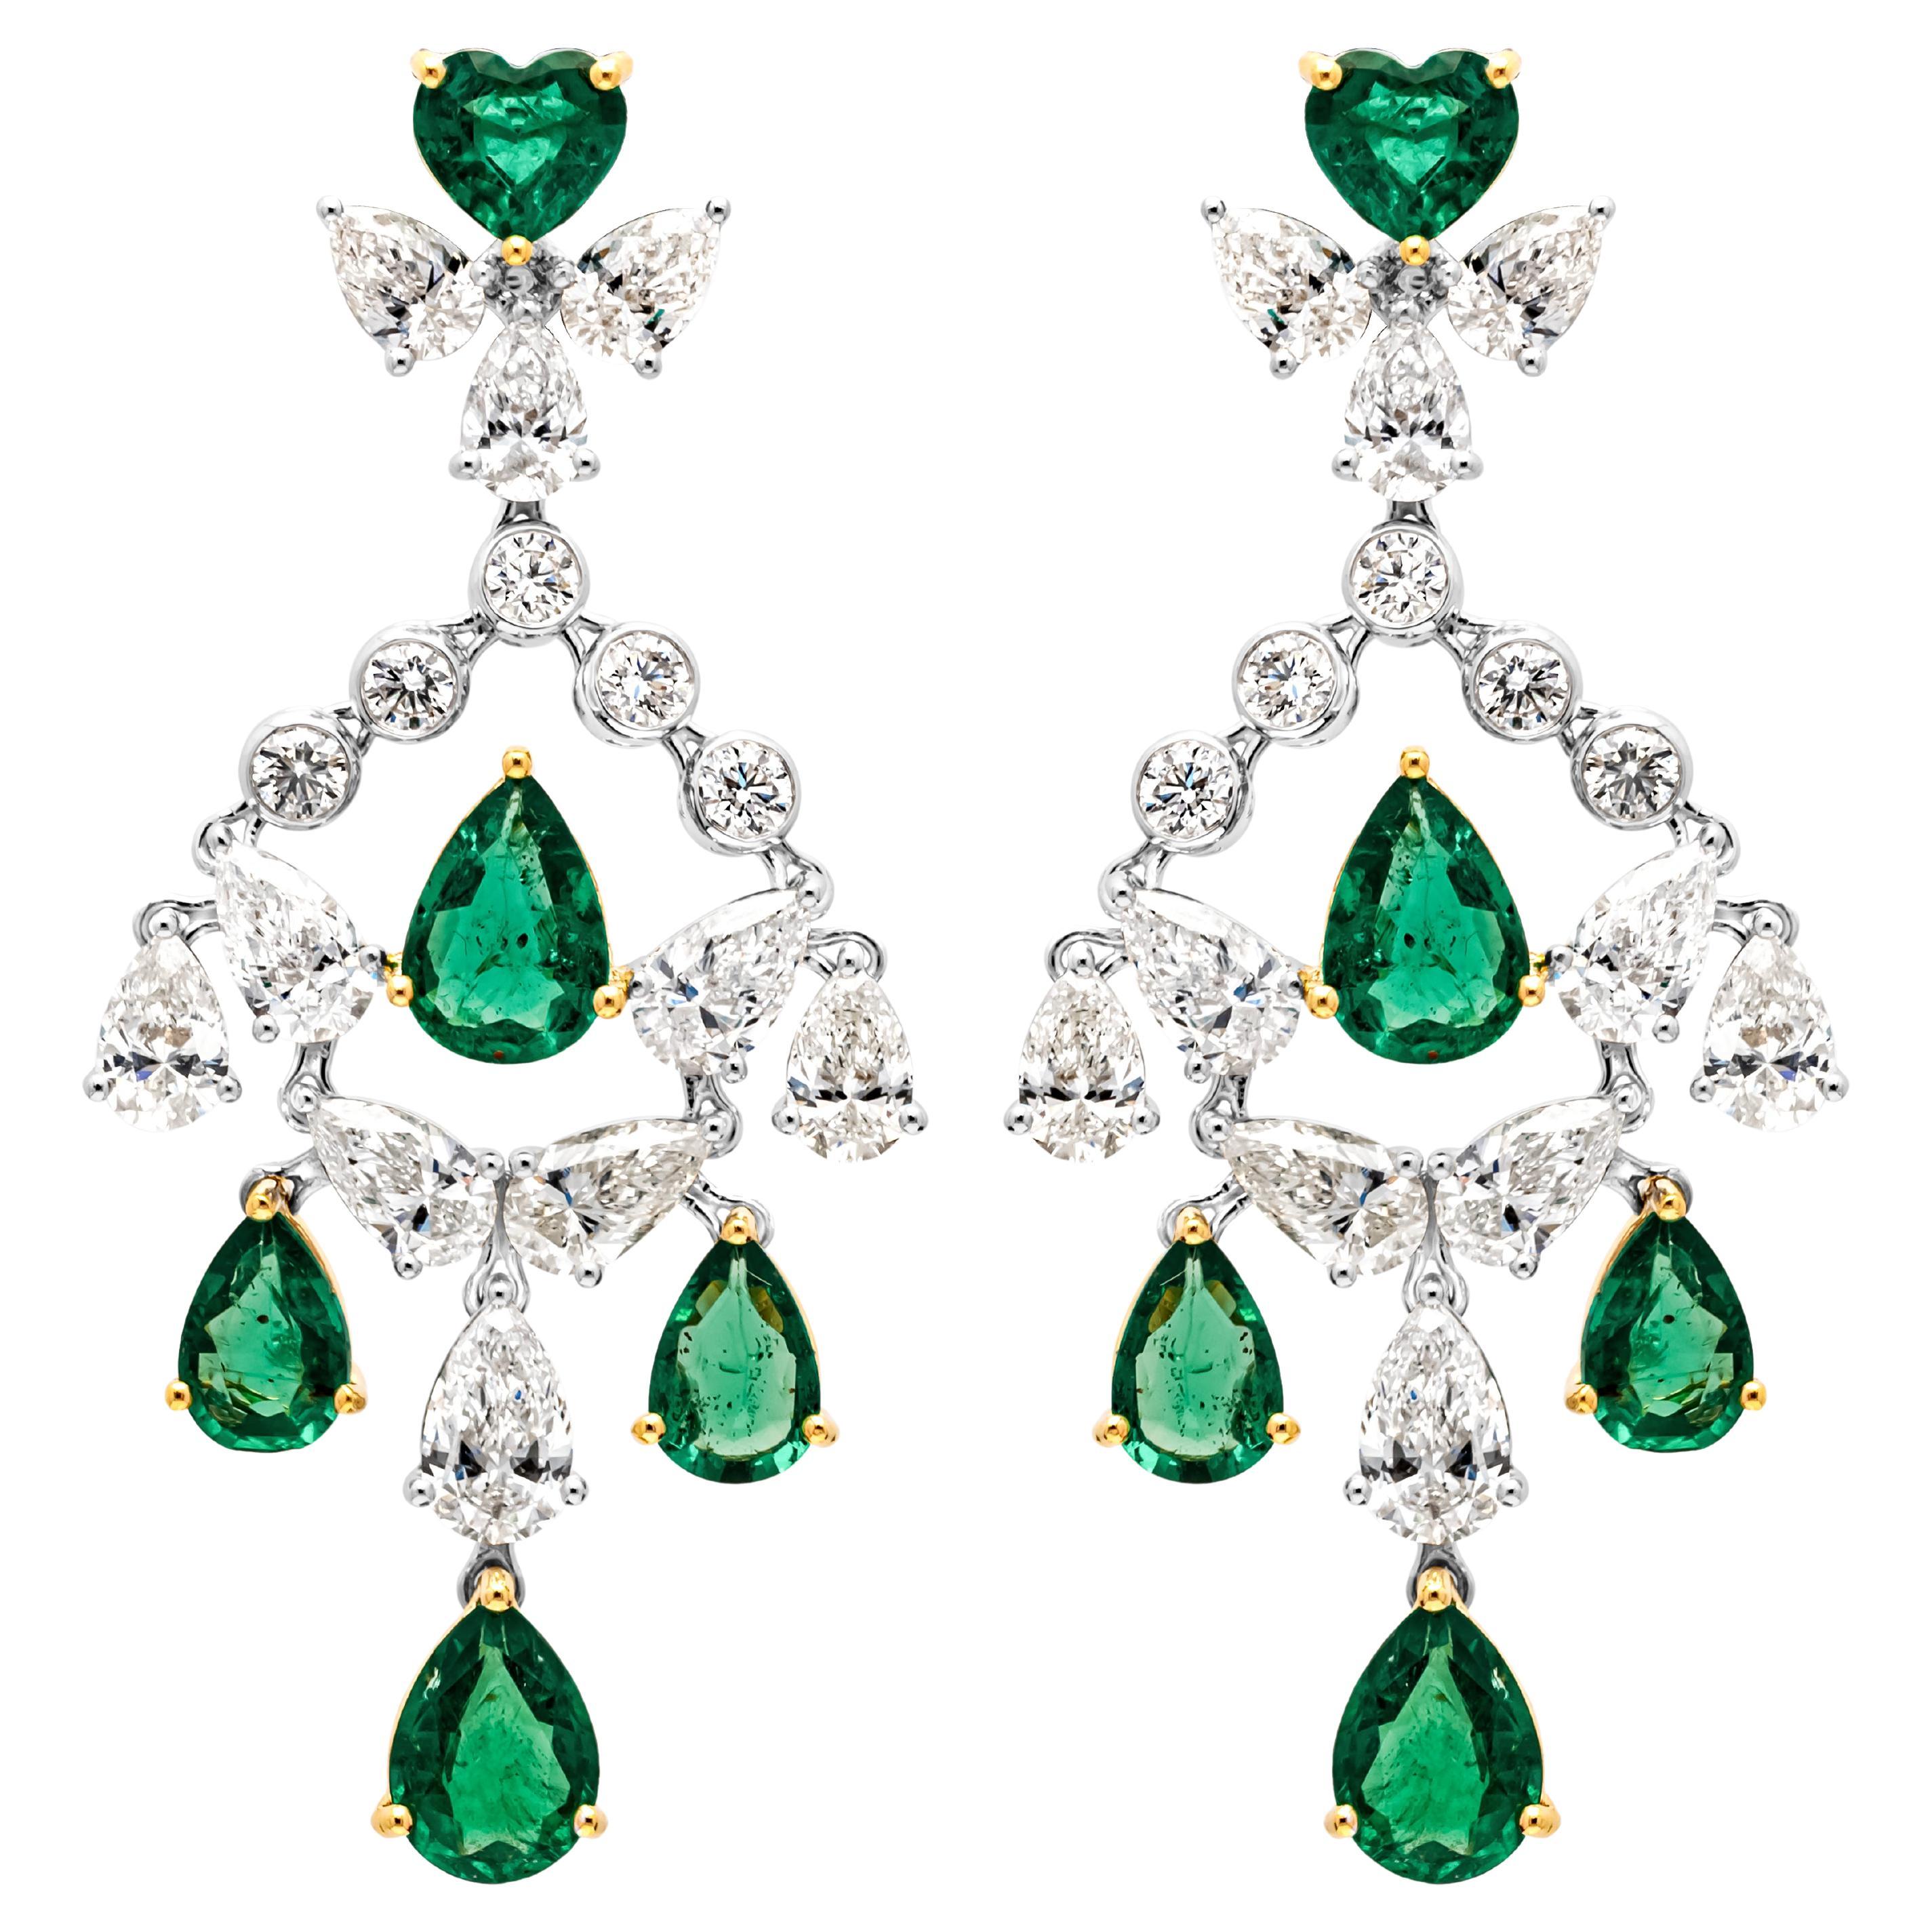 Roman Malakov 8.56 Carats Total Mixed Cut Diamond & Emerald Chandelier Earrings